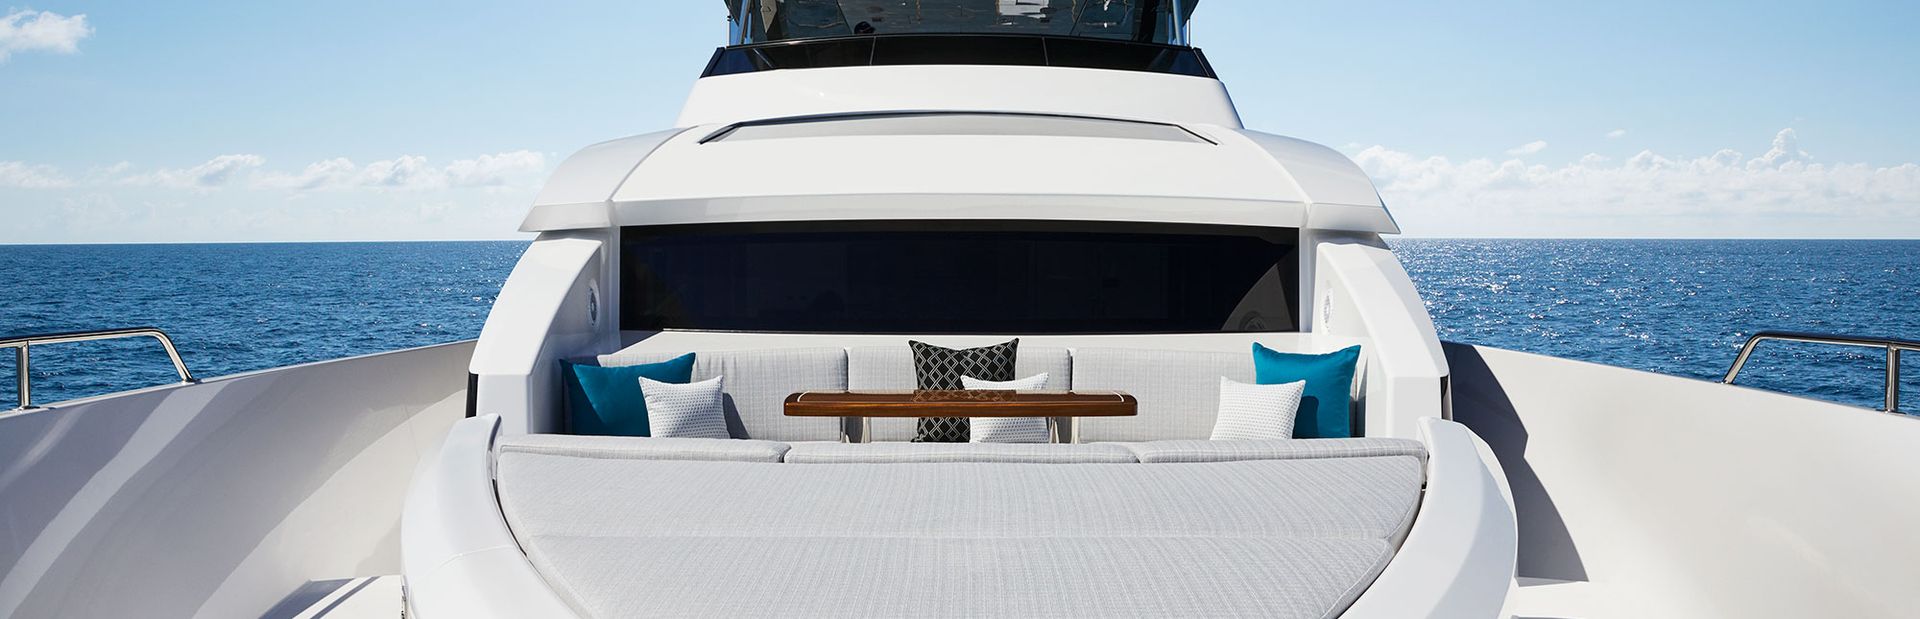 Hatteras Yachts Profile Photo